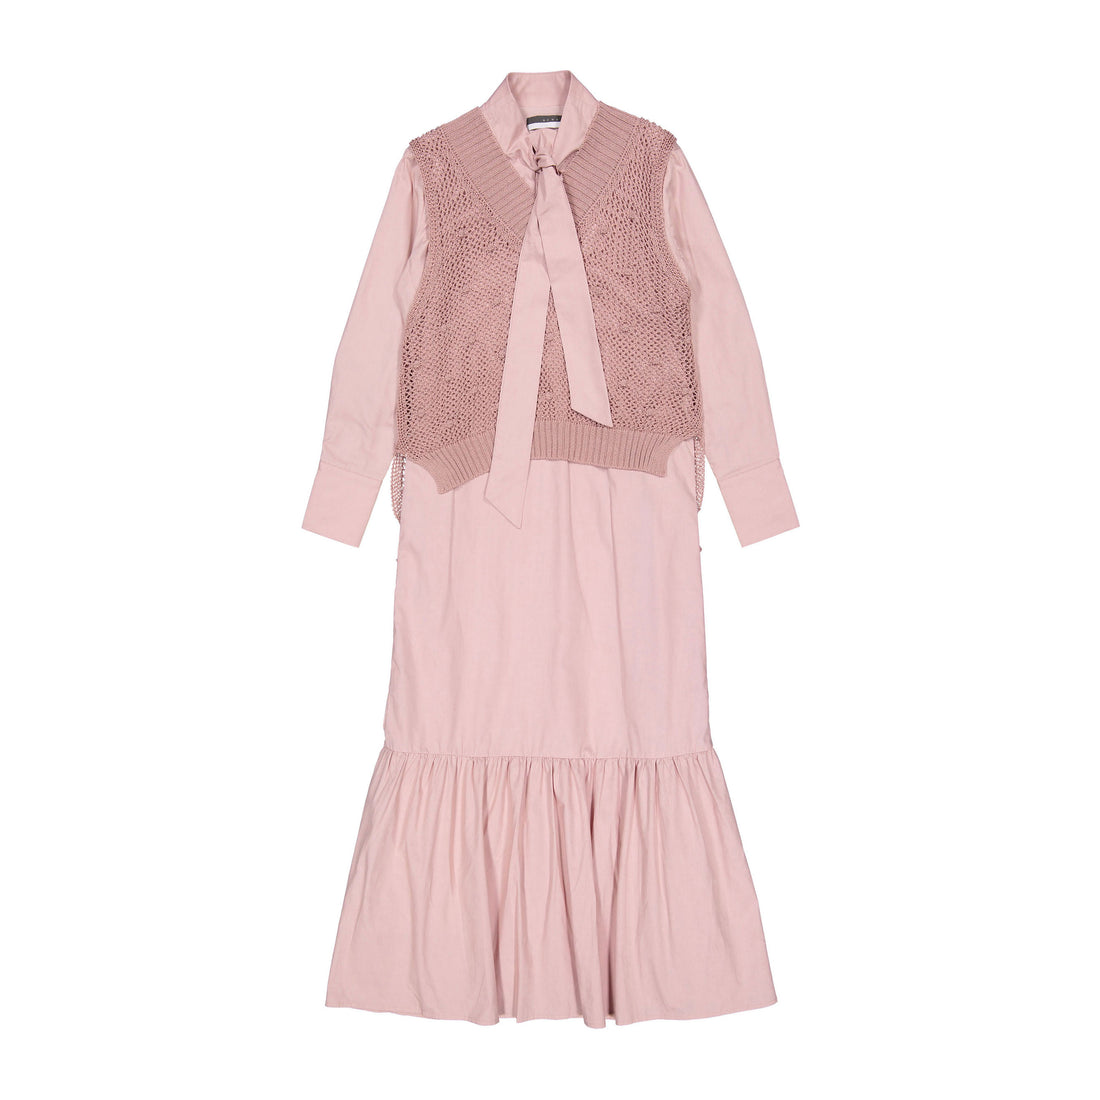 ROWE Pink Knit Vest Overlay Dress